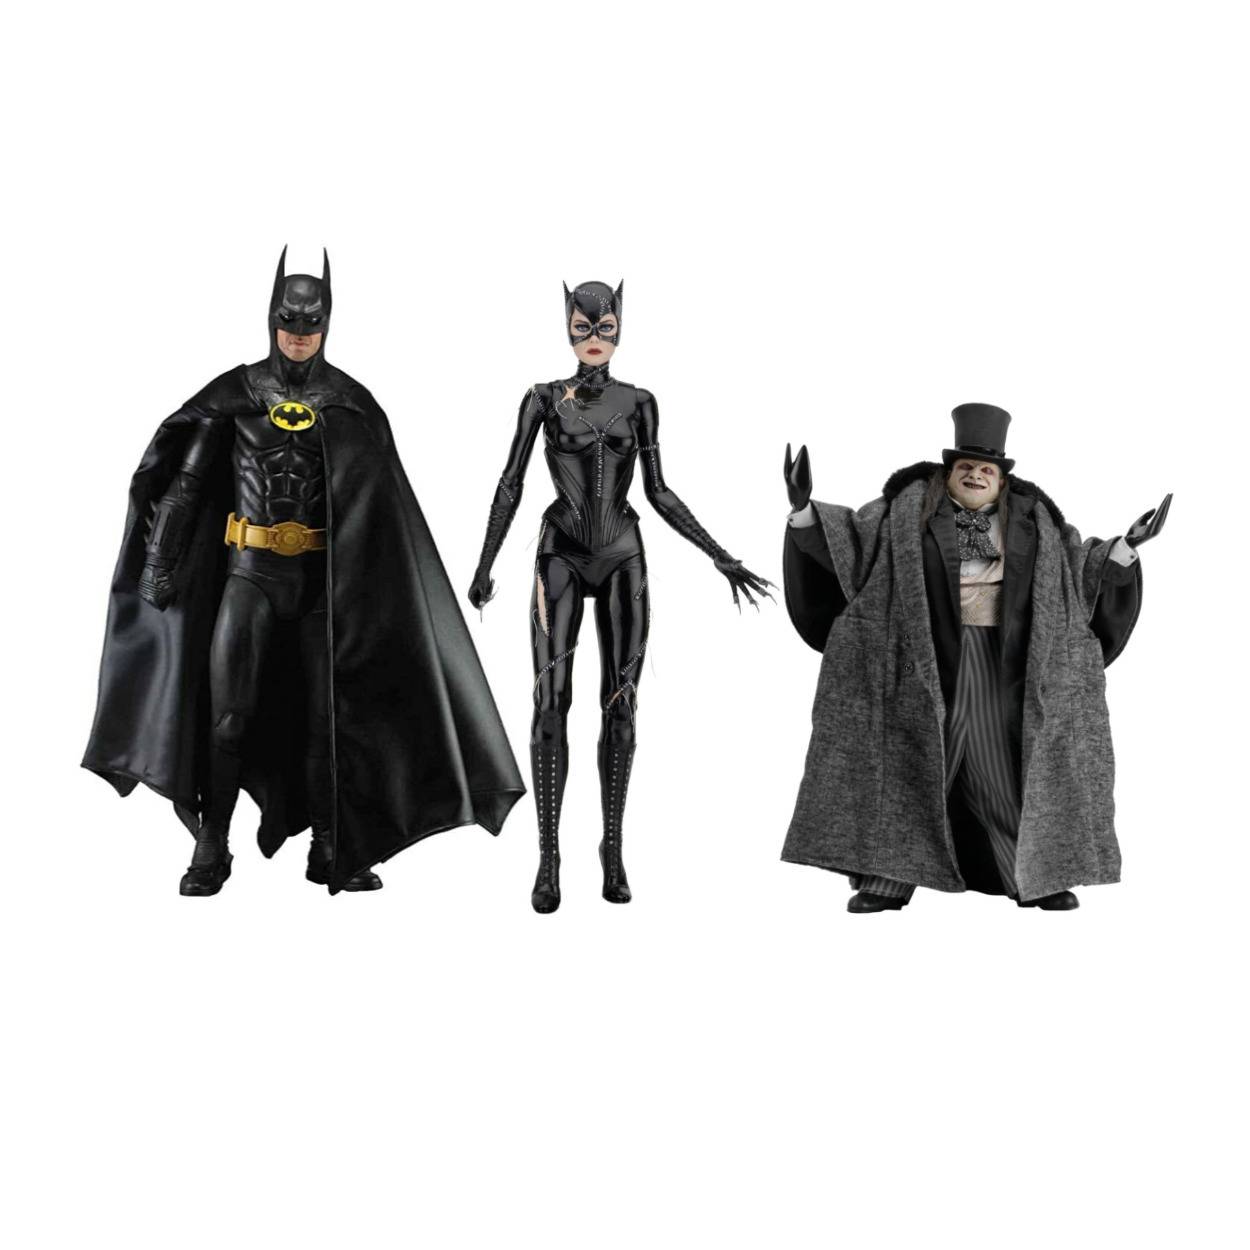 NECA Batman Returns - Batman (Michael Keaton) with Catwoman and Penguin Action Figures